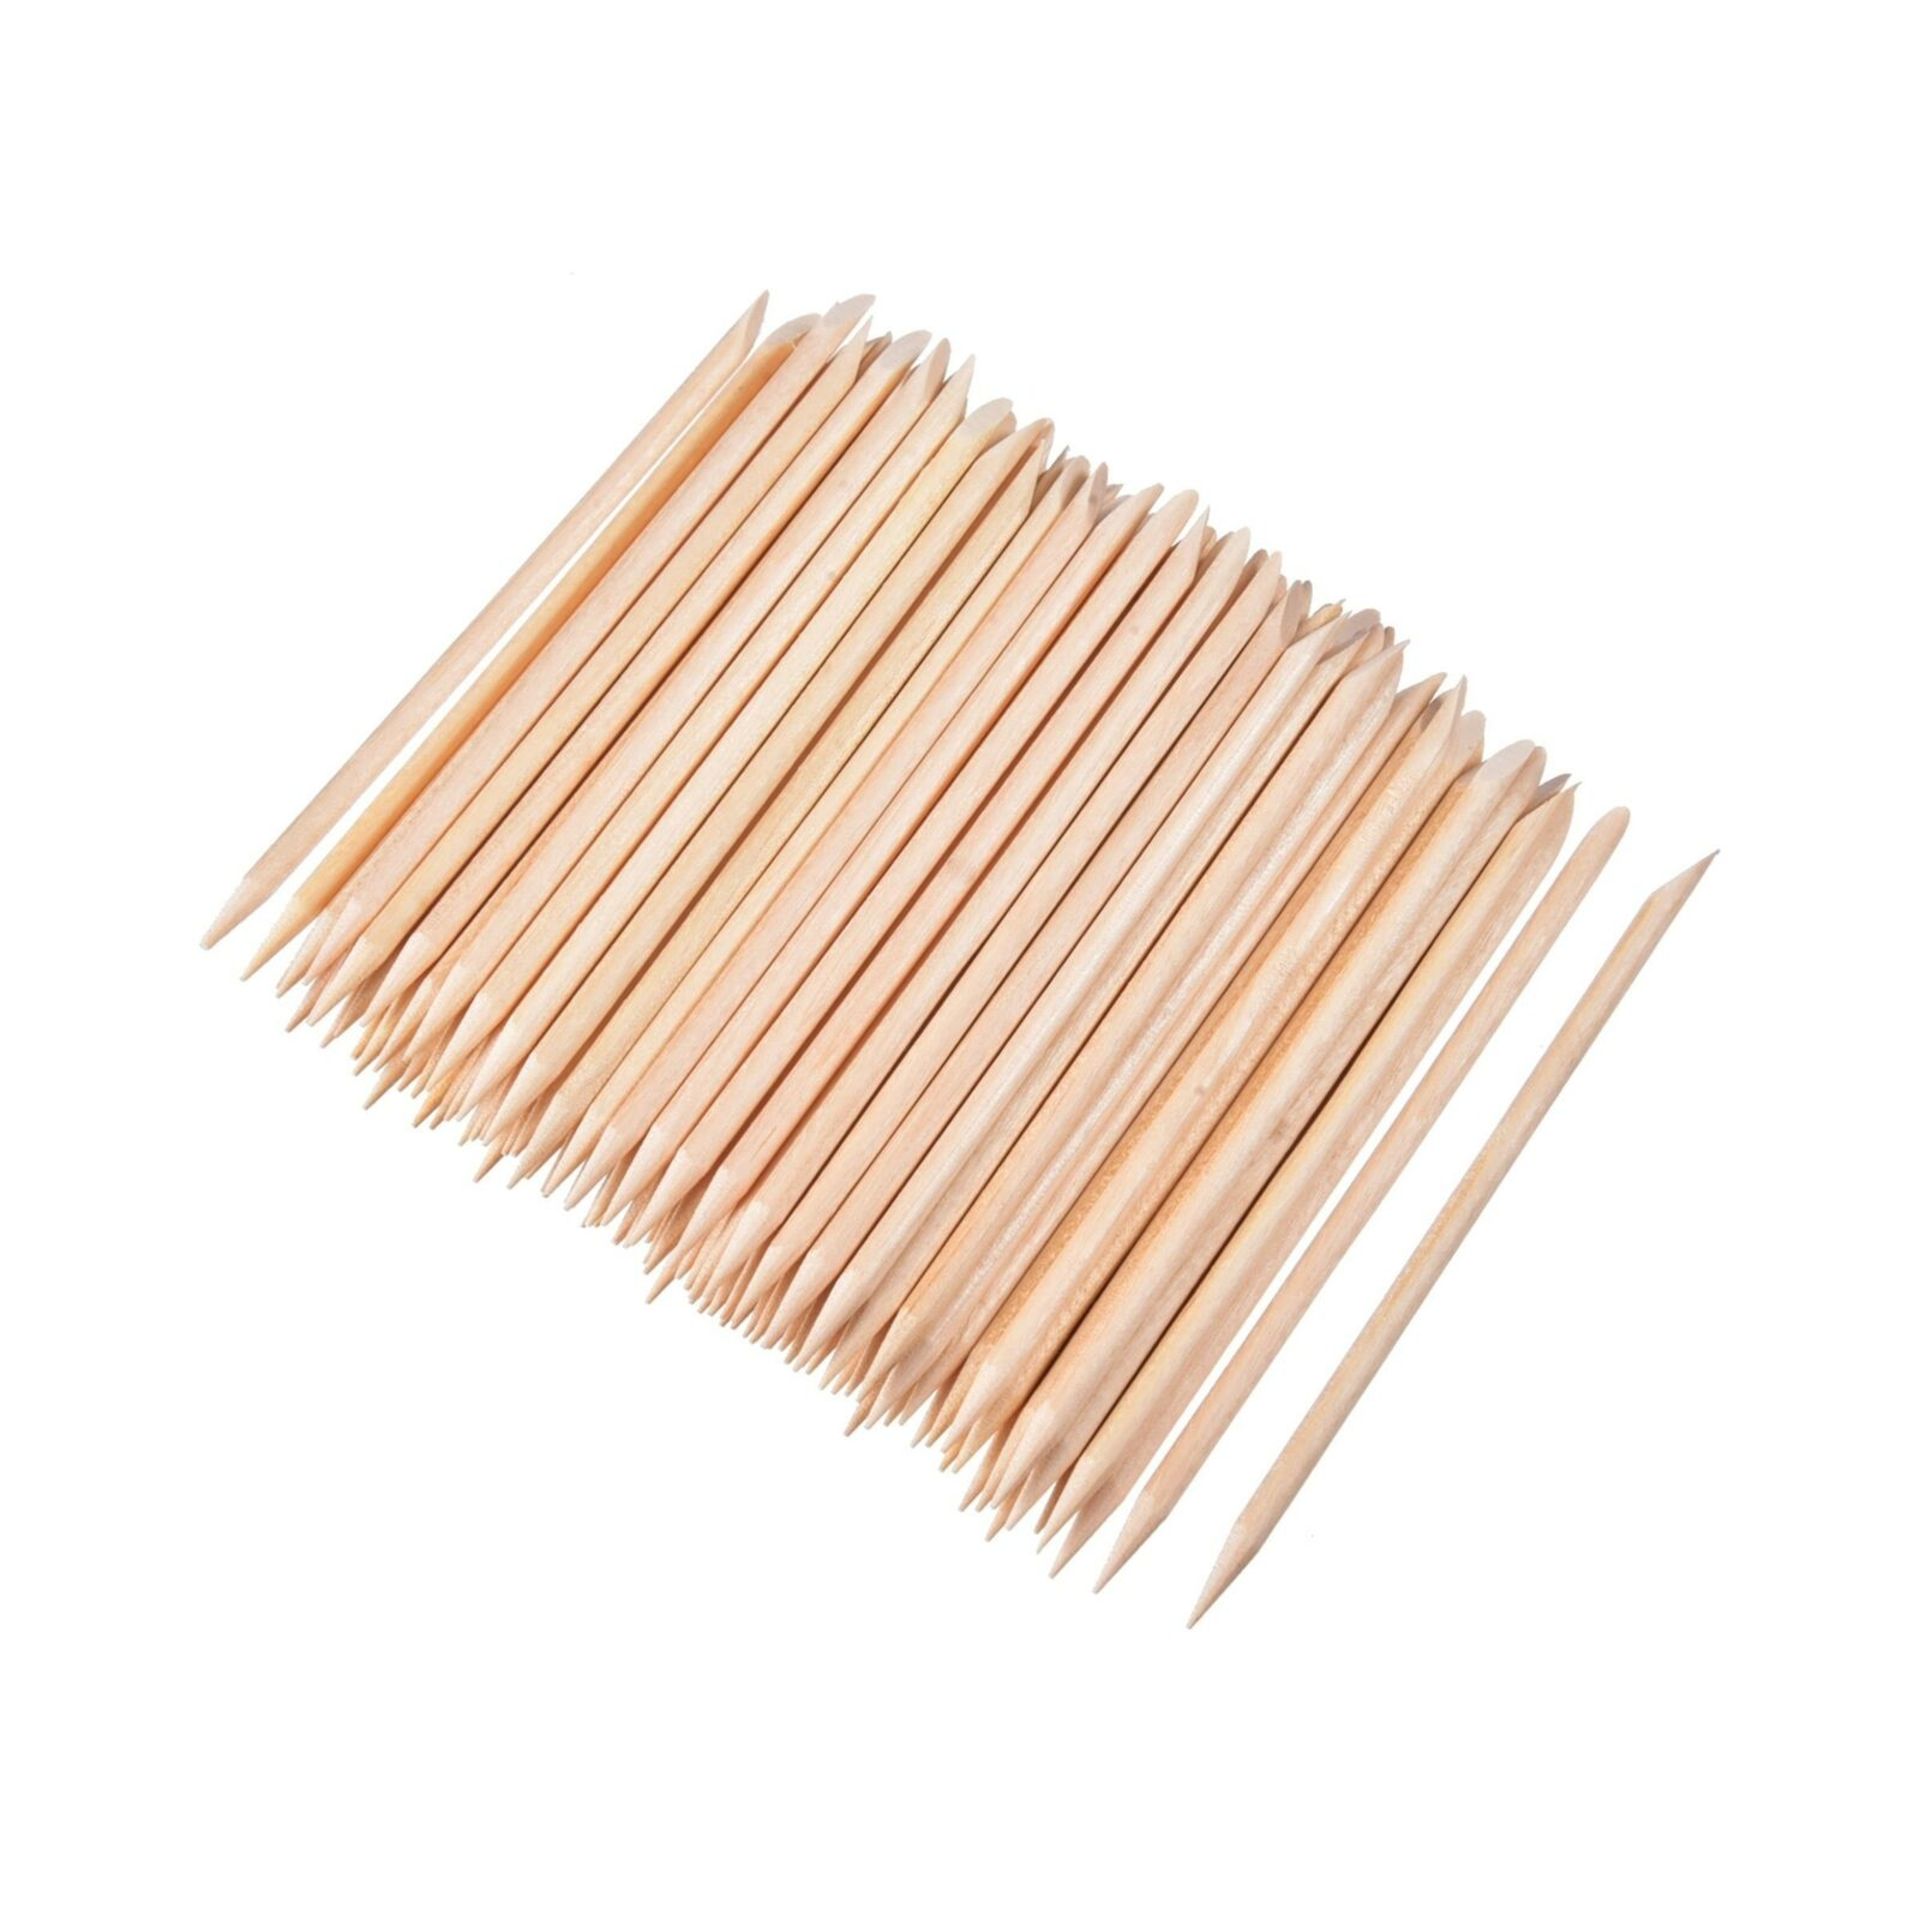 1000 X 11cm Orangewood Sticks For Nail Salons - Nail Art, Manicures Etc. - Image 8 of 8